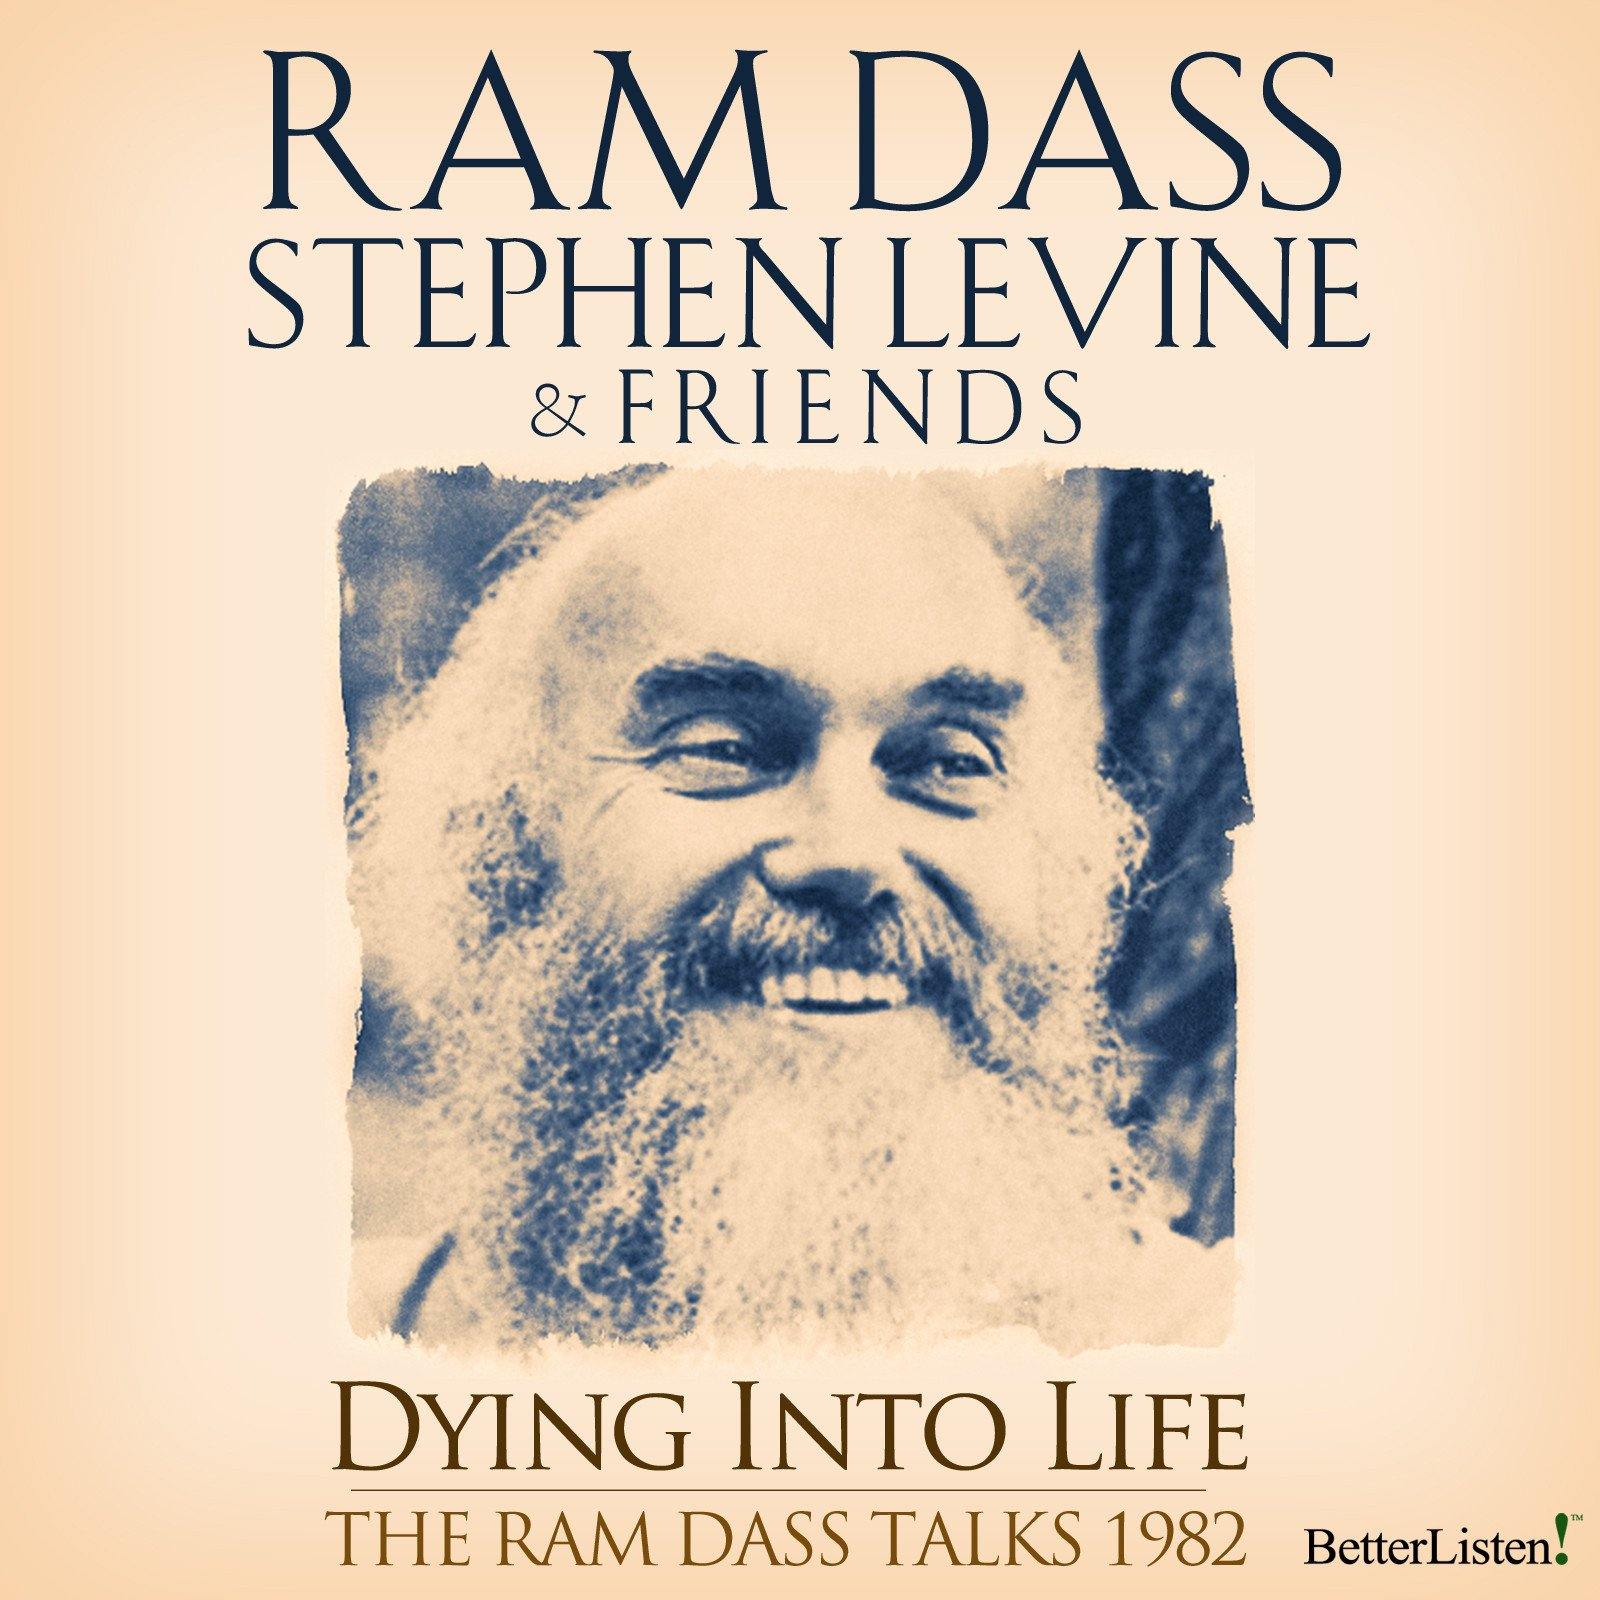 Dying Into Life Relationship Sampler with Ram Dass and Stephen Levine Audio Program BetterListen! - BetterListen!